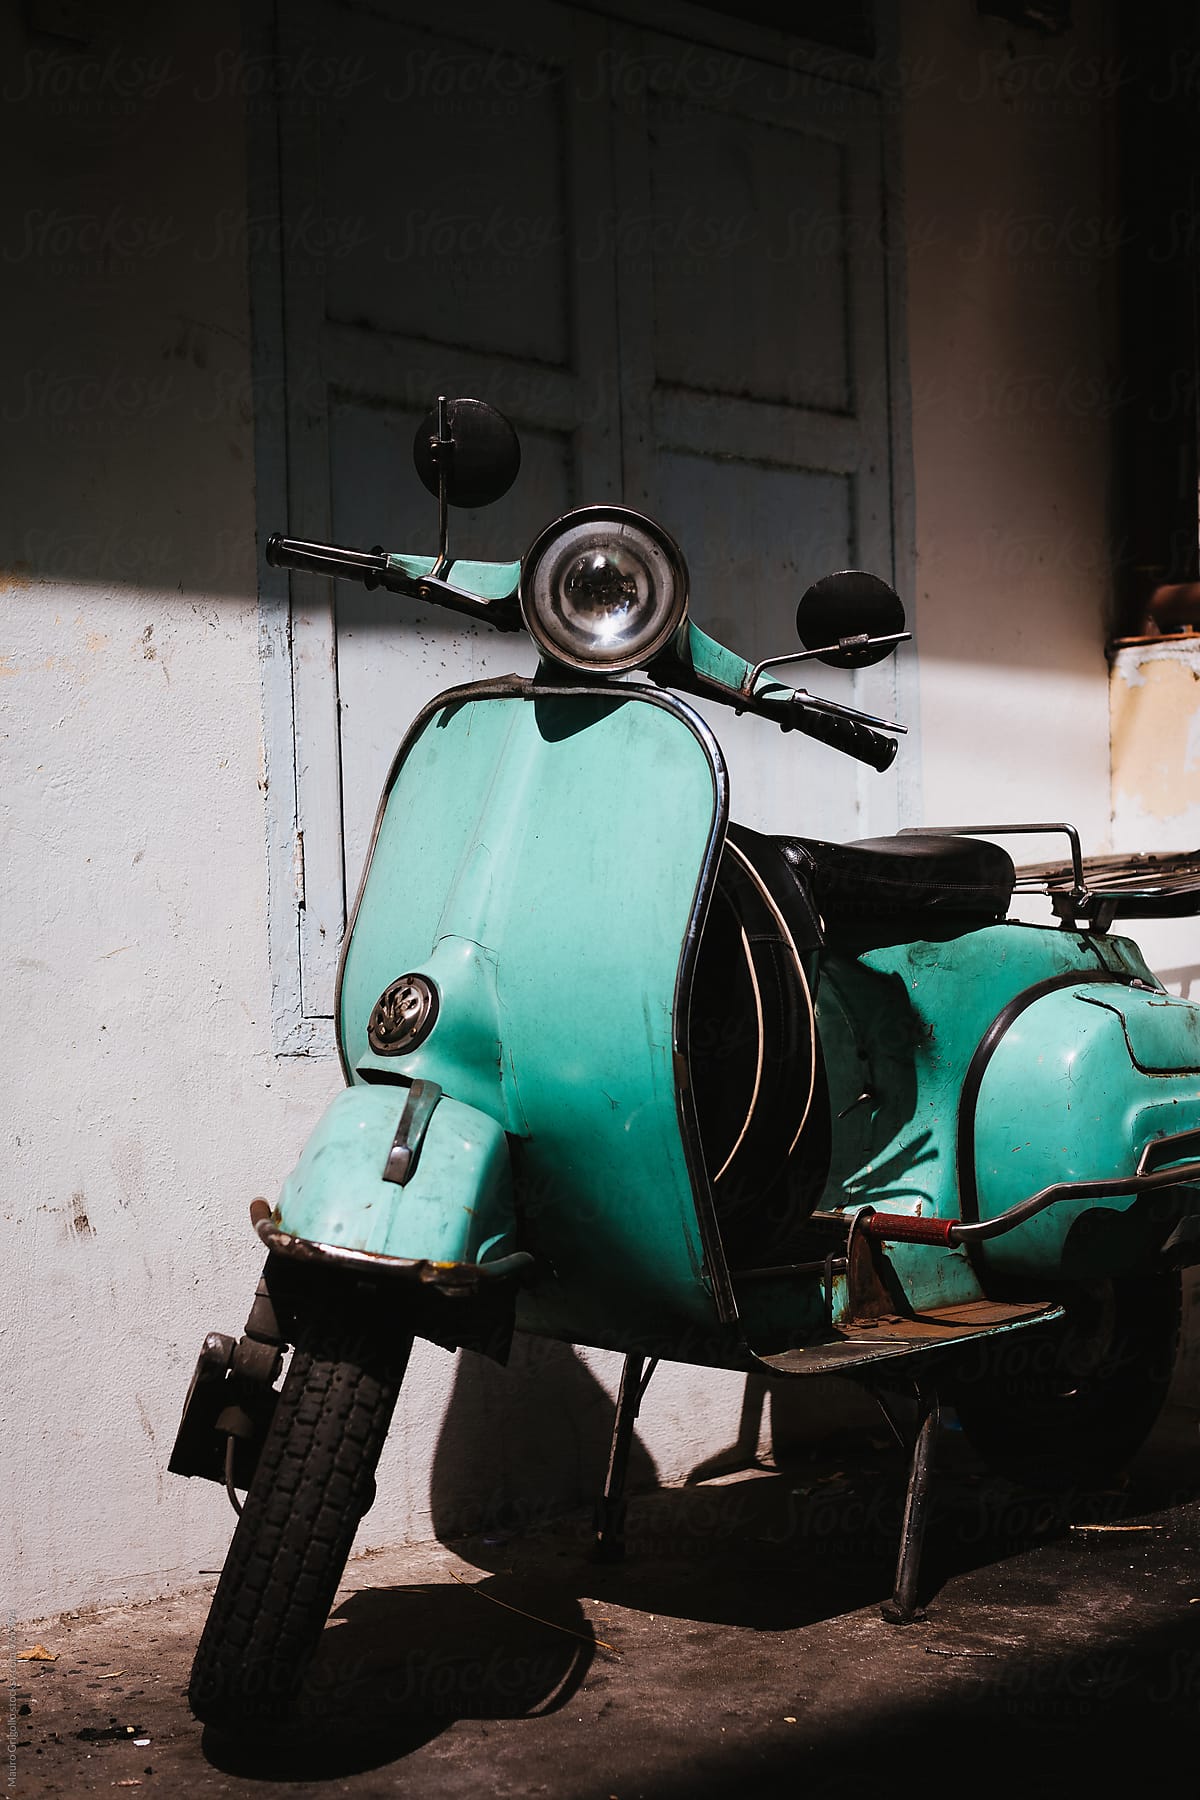 A vintage motorcycle